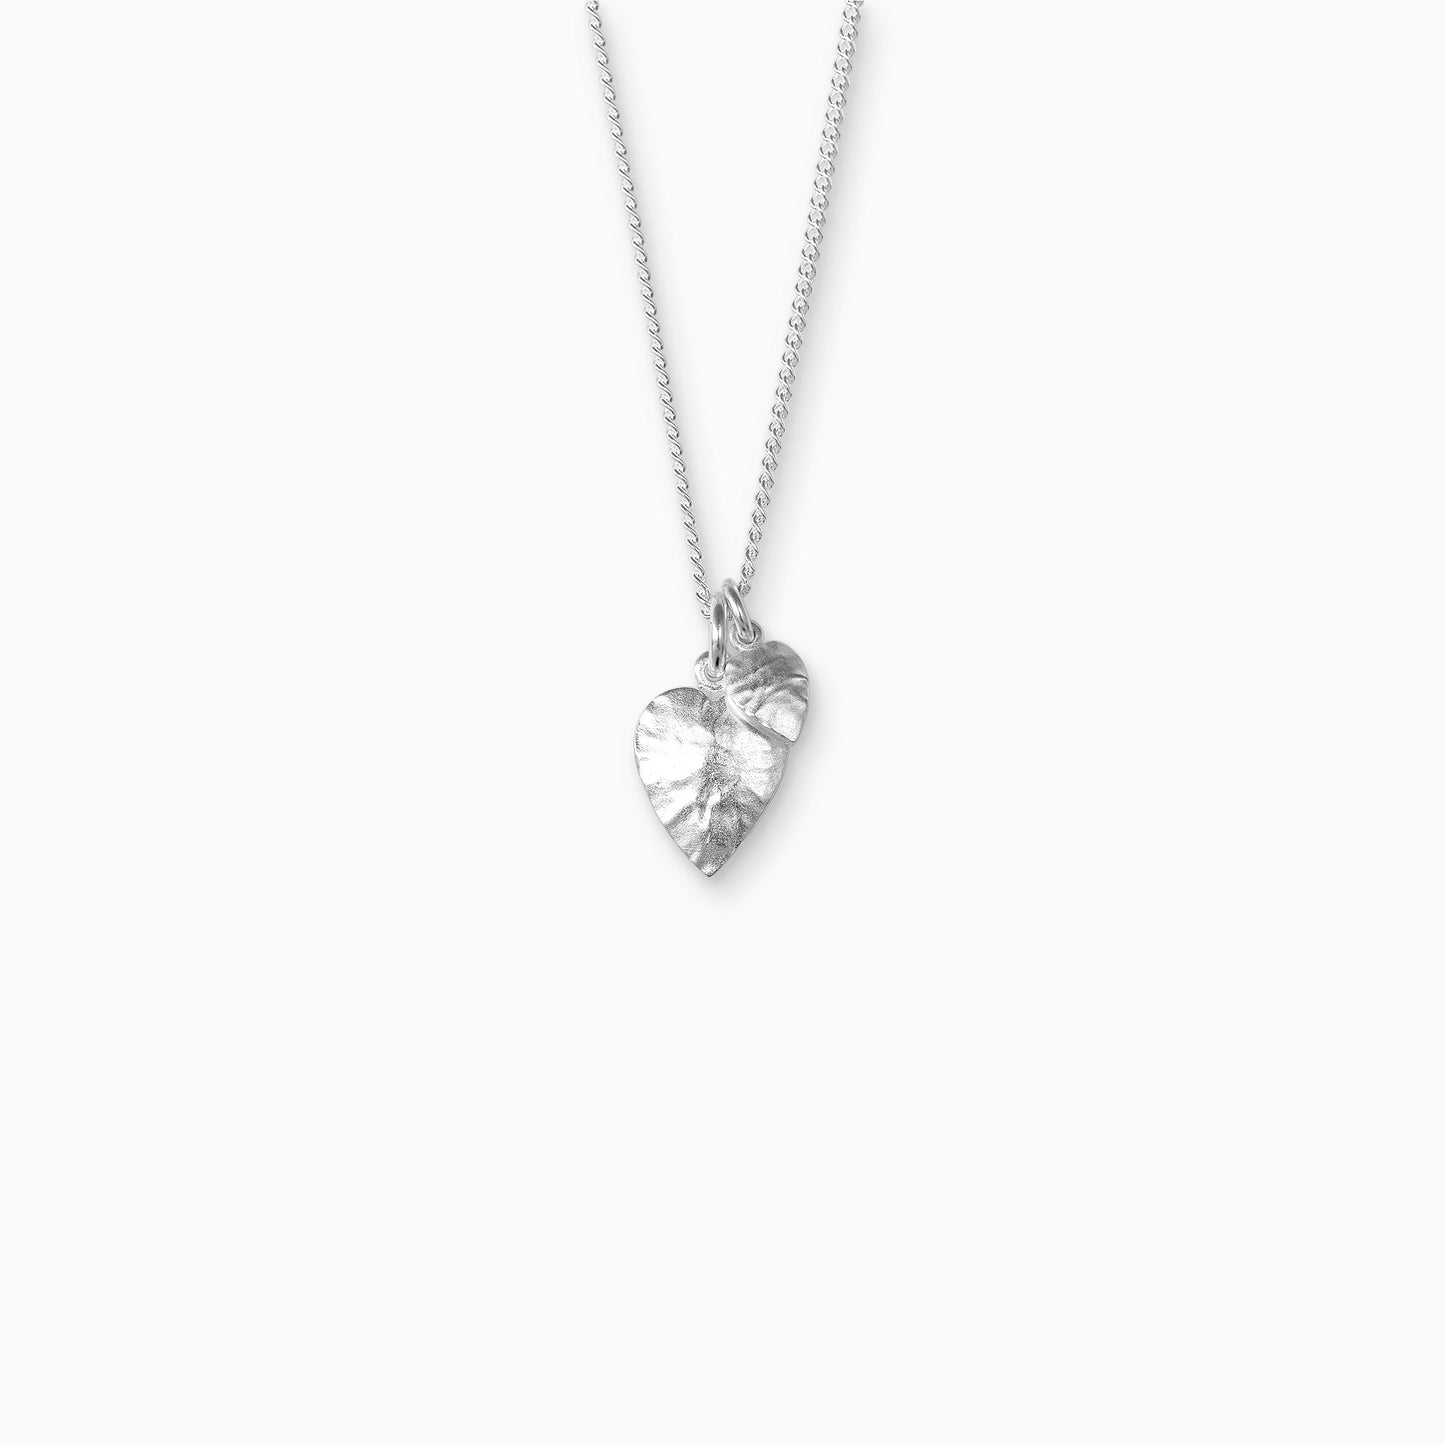 Treasure Heart and Weeny Heart charm necklace